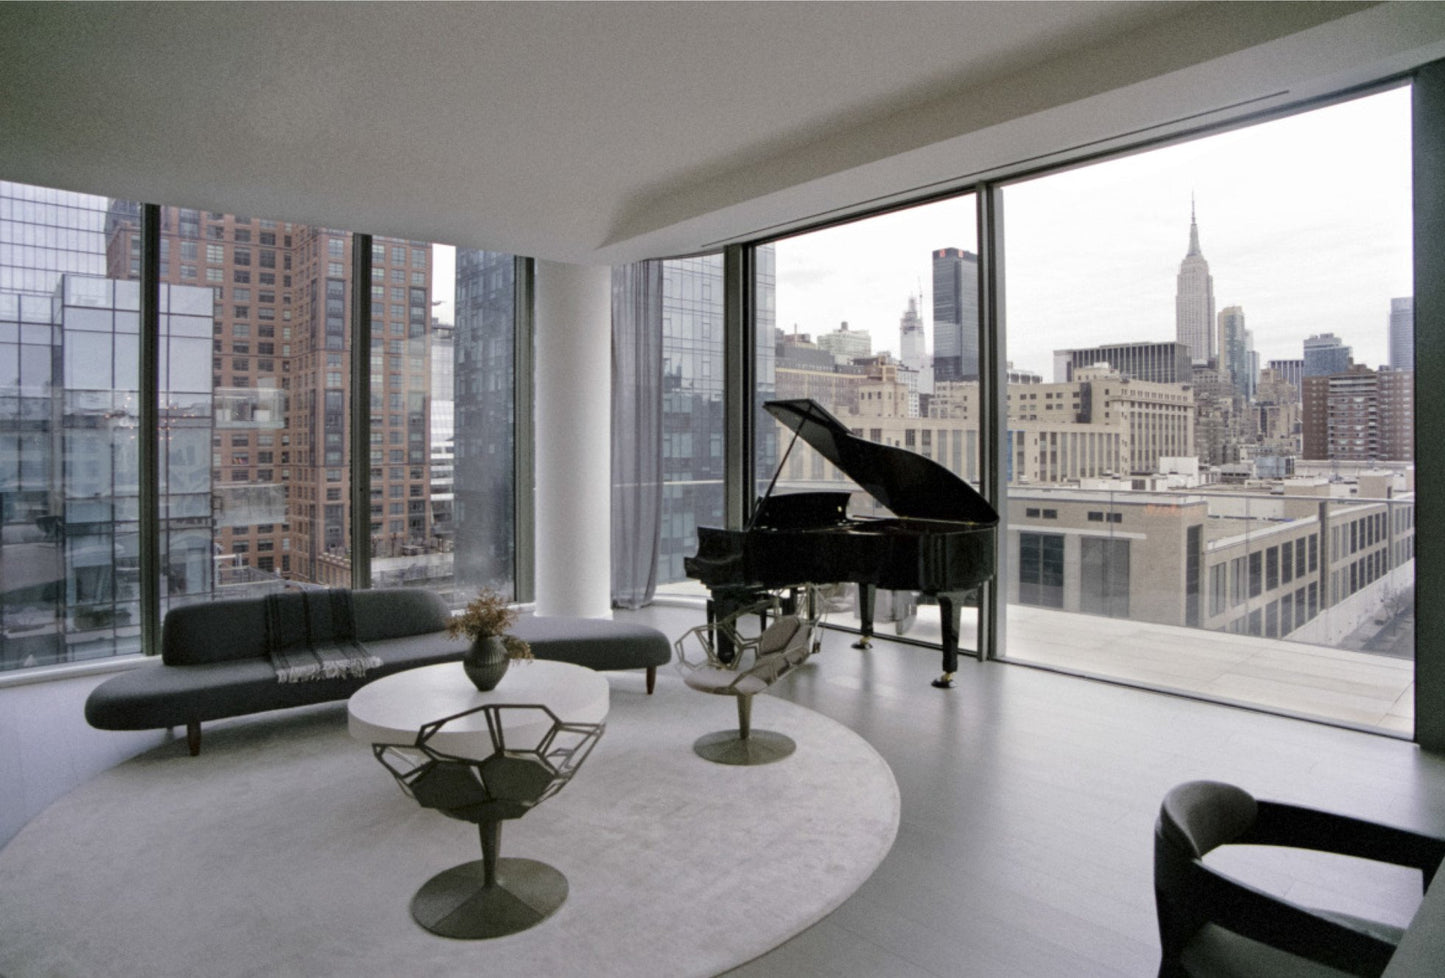 Private Views: A High-Rise Panorama of Manhattan – Andi Schmied